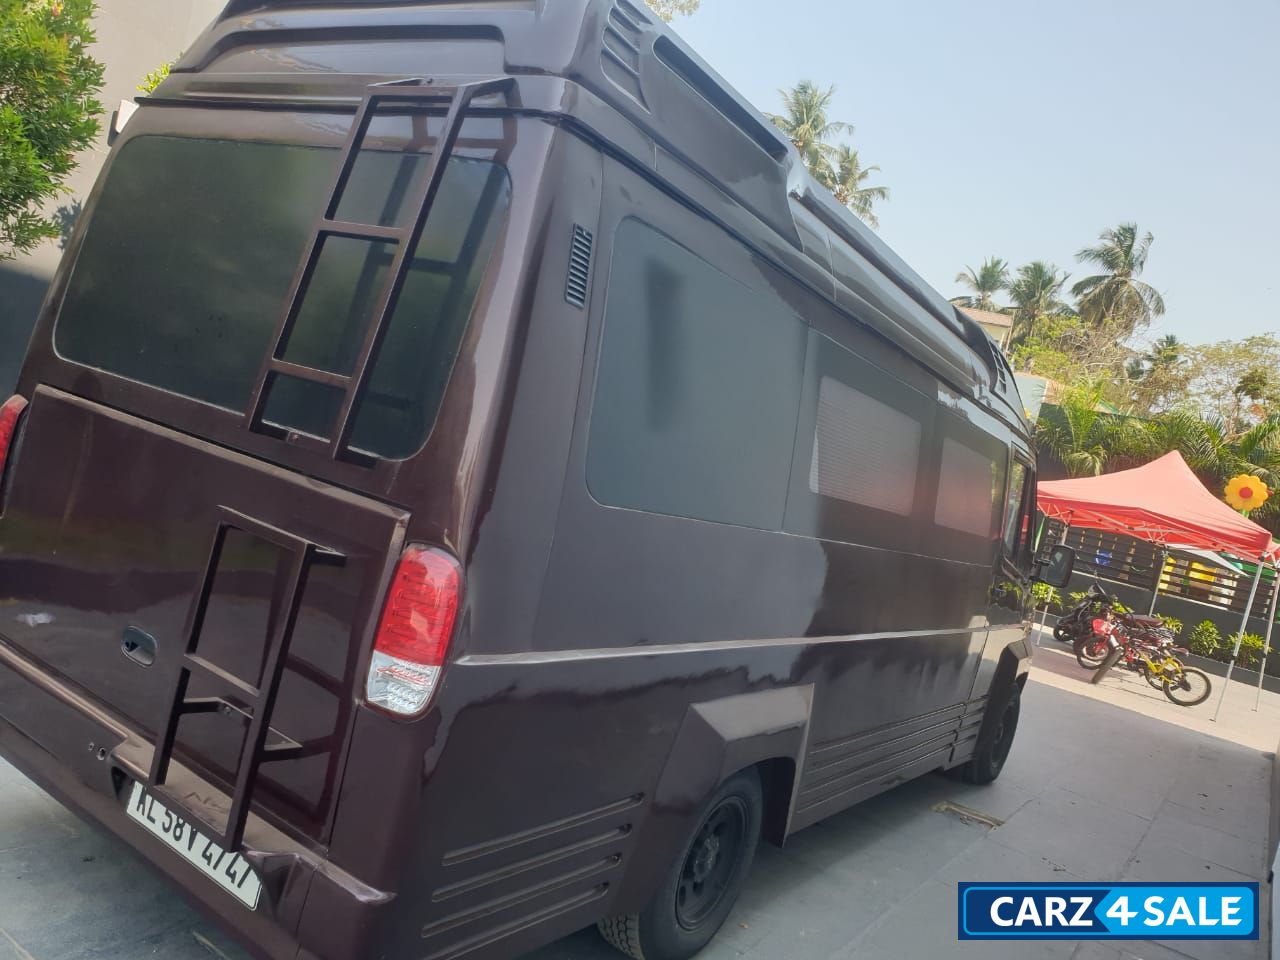 Meroon Force Motors Traveller Caravan  - Camper van